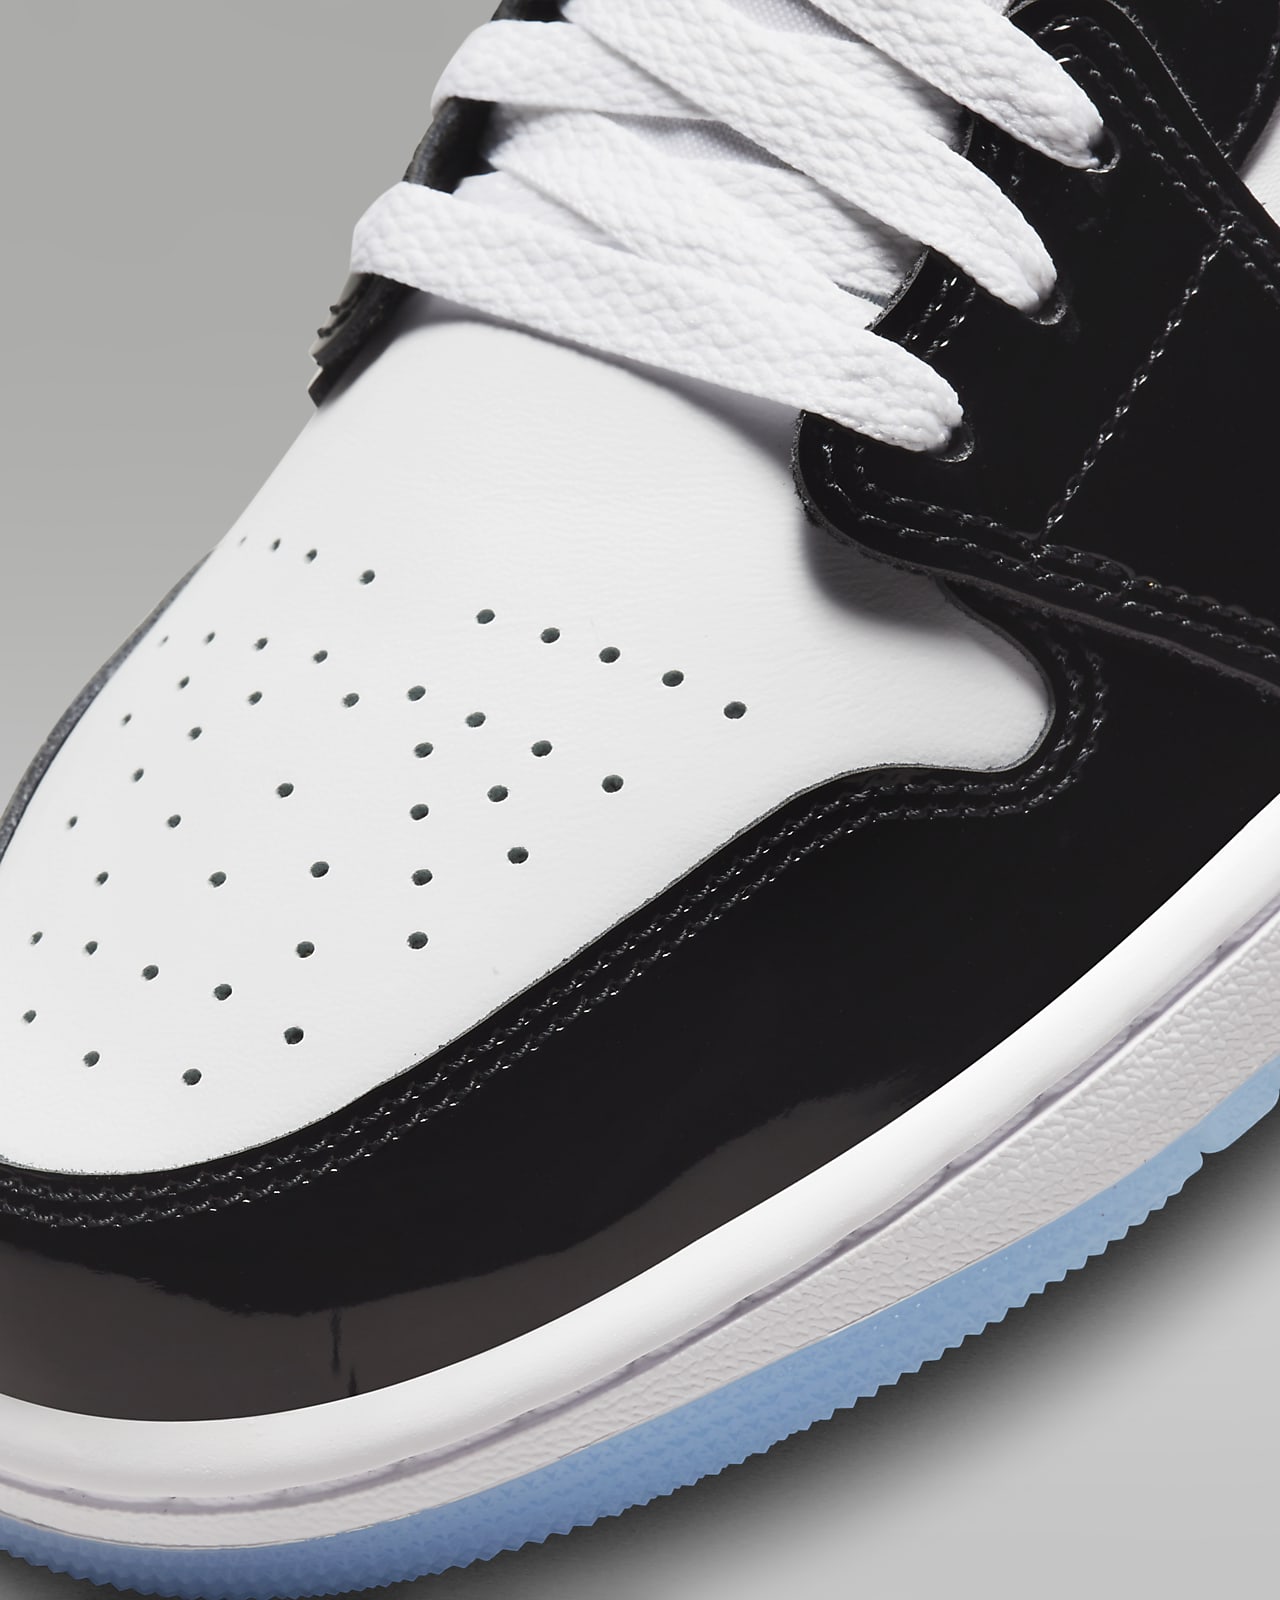 Nike Air Jordan 5 x Off White Sneakers · Free Stock Photo